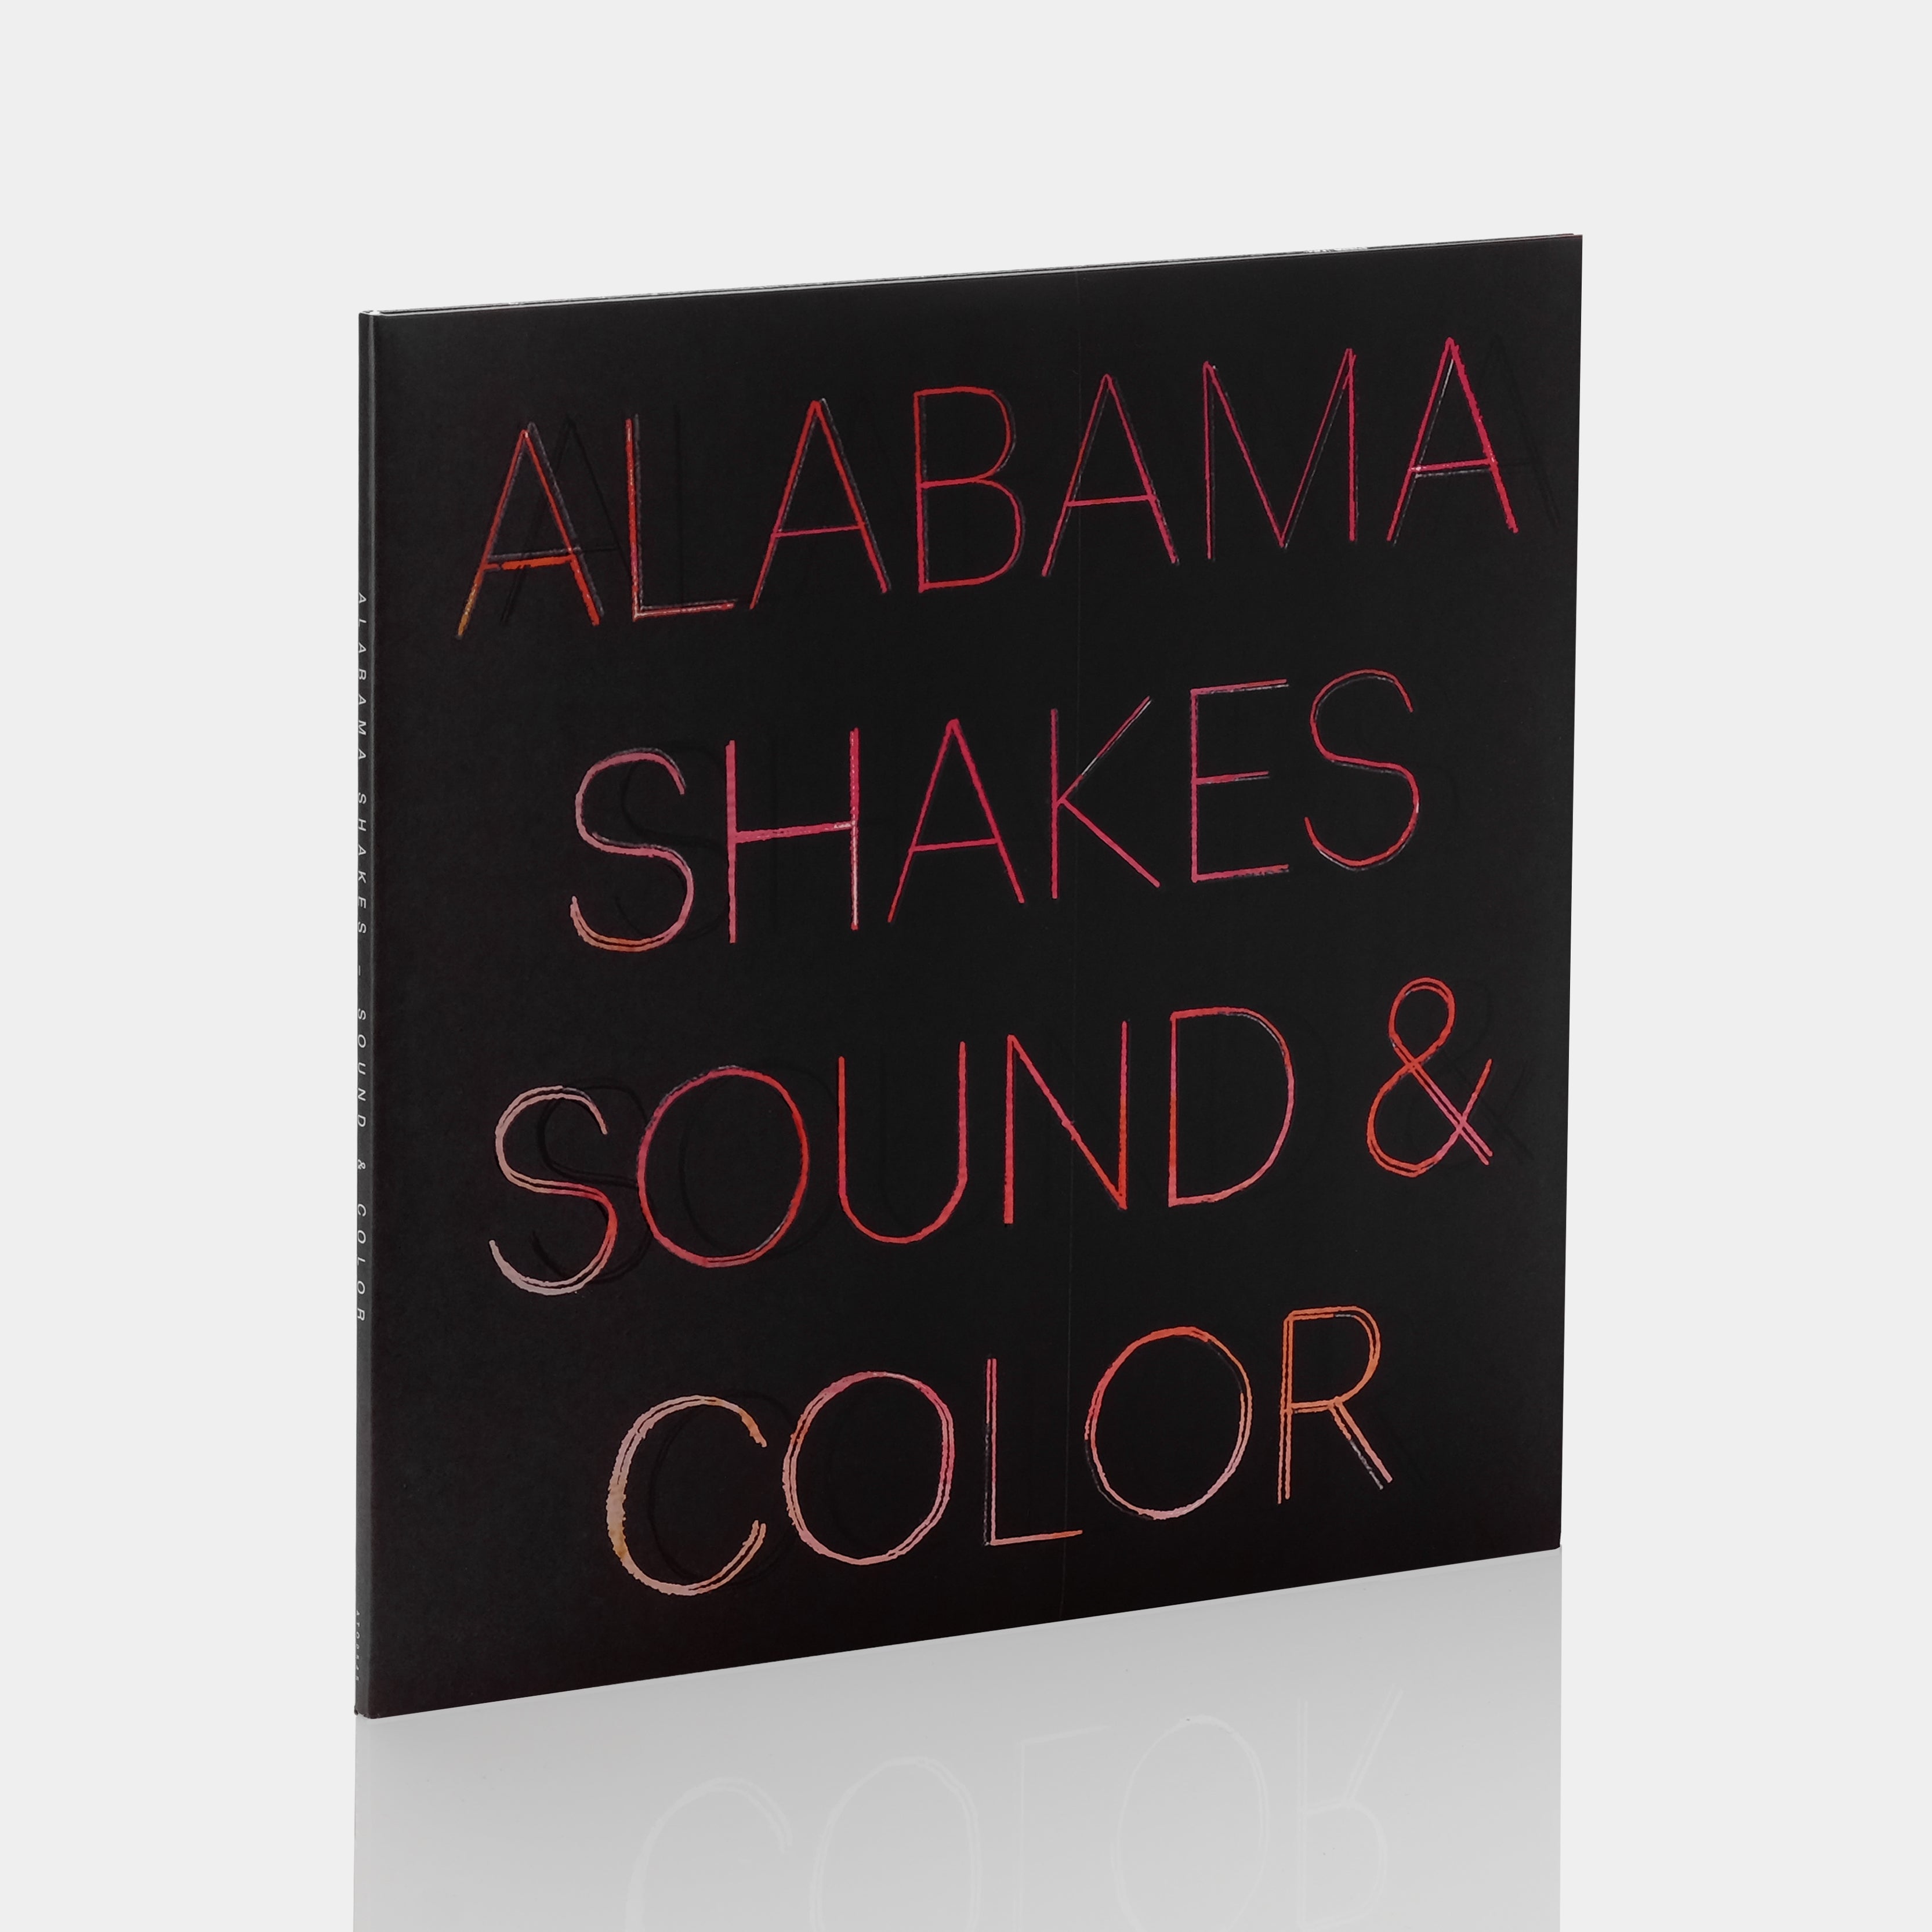 Alabama Shakes - Sound & Color (Deluxe Edition) 2xLP Red, Black & Pink Vinyl Record